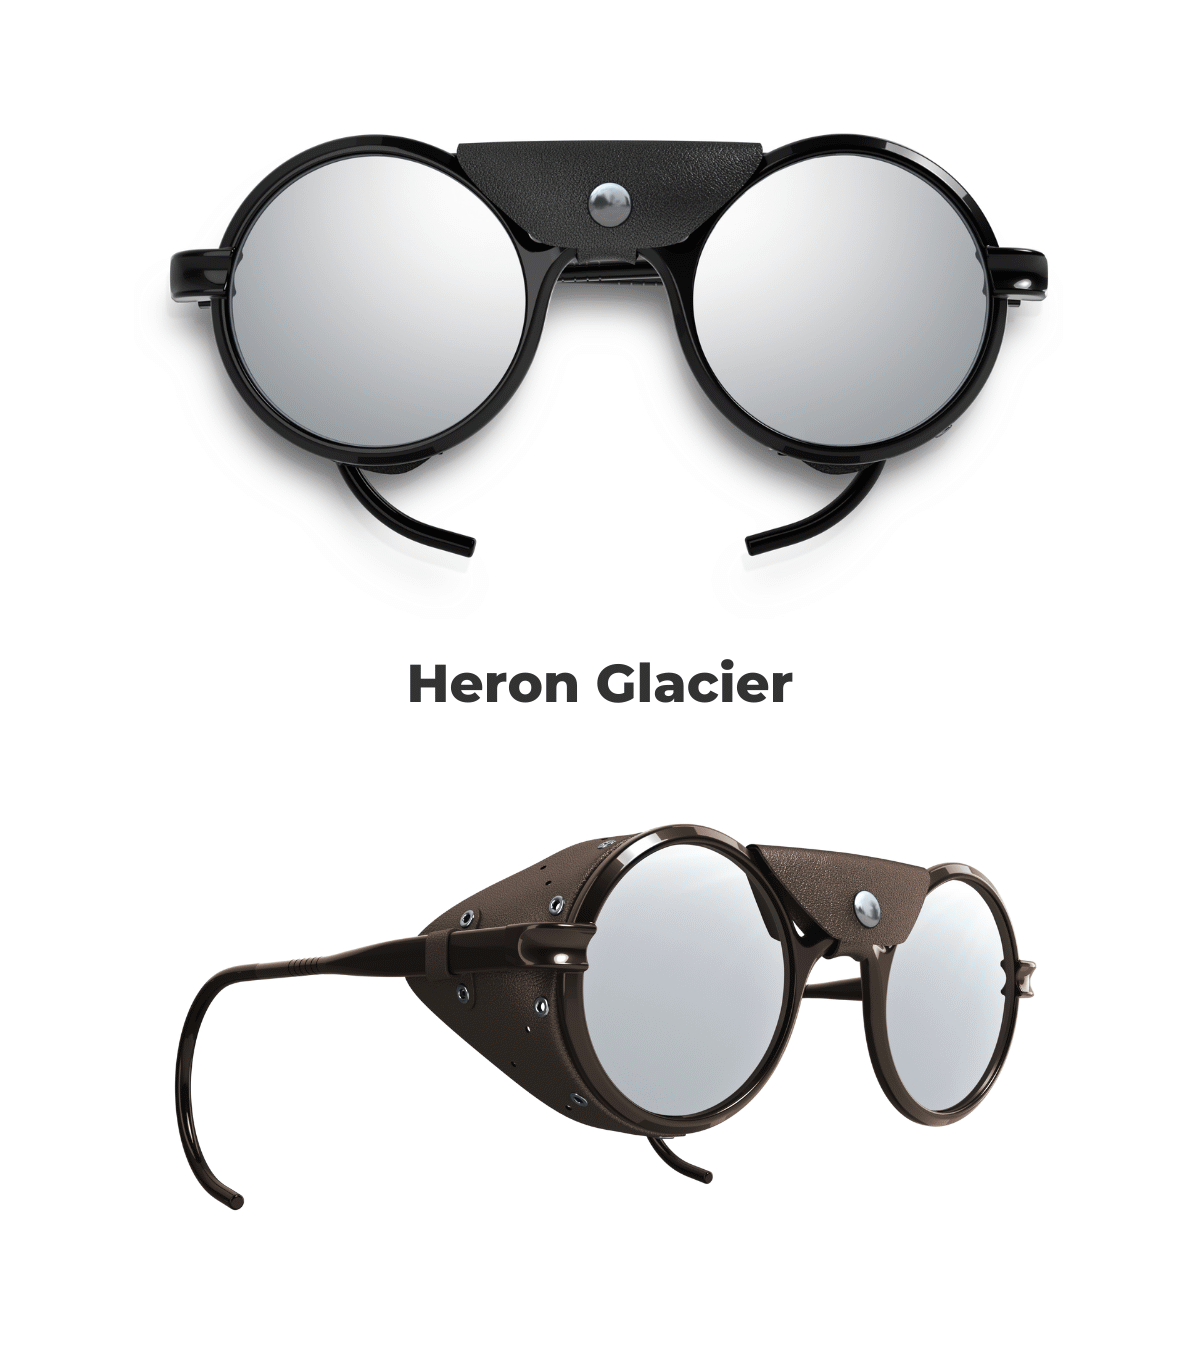 Vallon: Get 25% off Heron Glacier and Mountain sunglasses